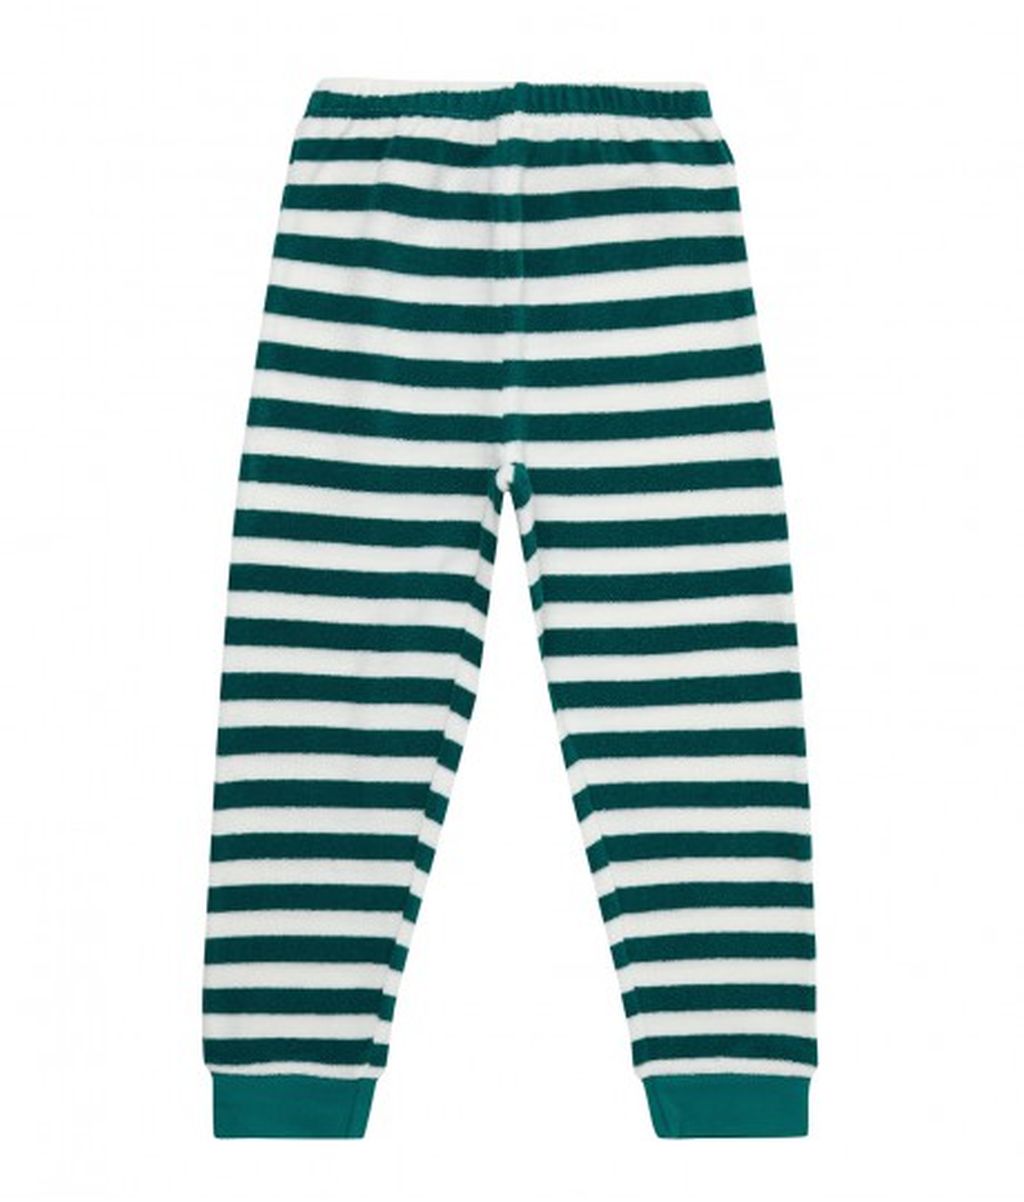 Long John Retro Terry Pyjama Teal Stripes+Bear Applique 98